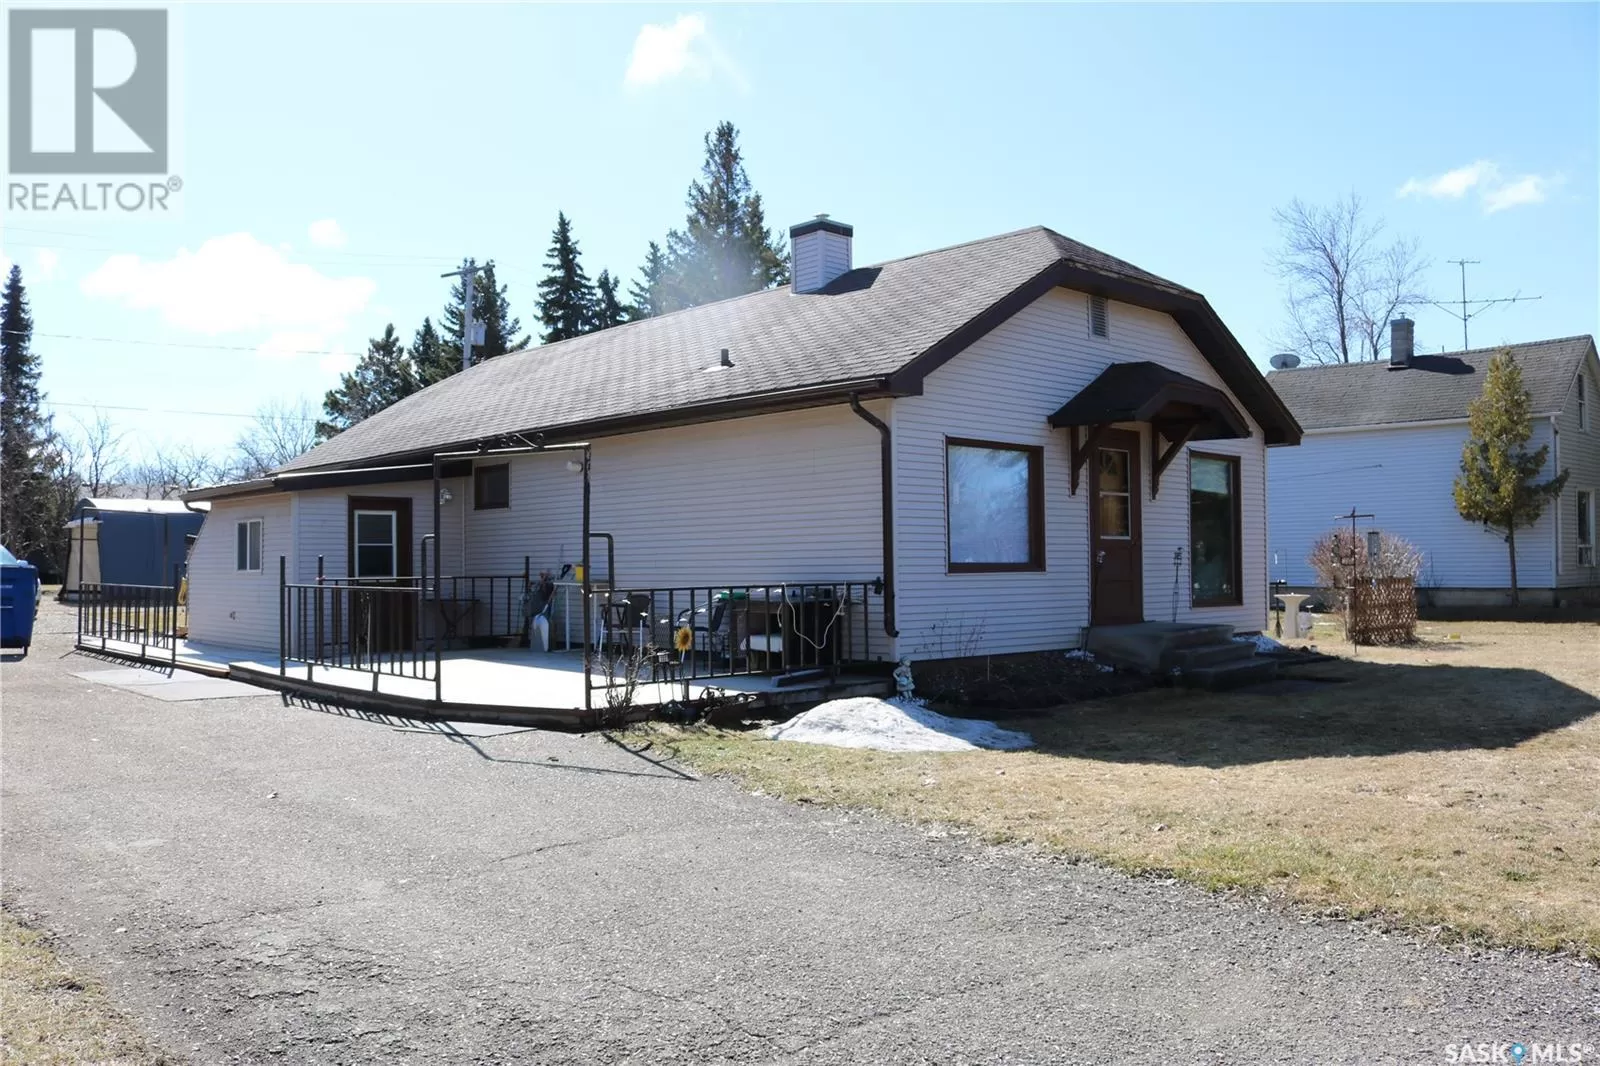 House for rent: 309 Main Street, Maryfield, Saskatchewan S0G 3K0